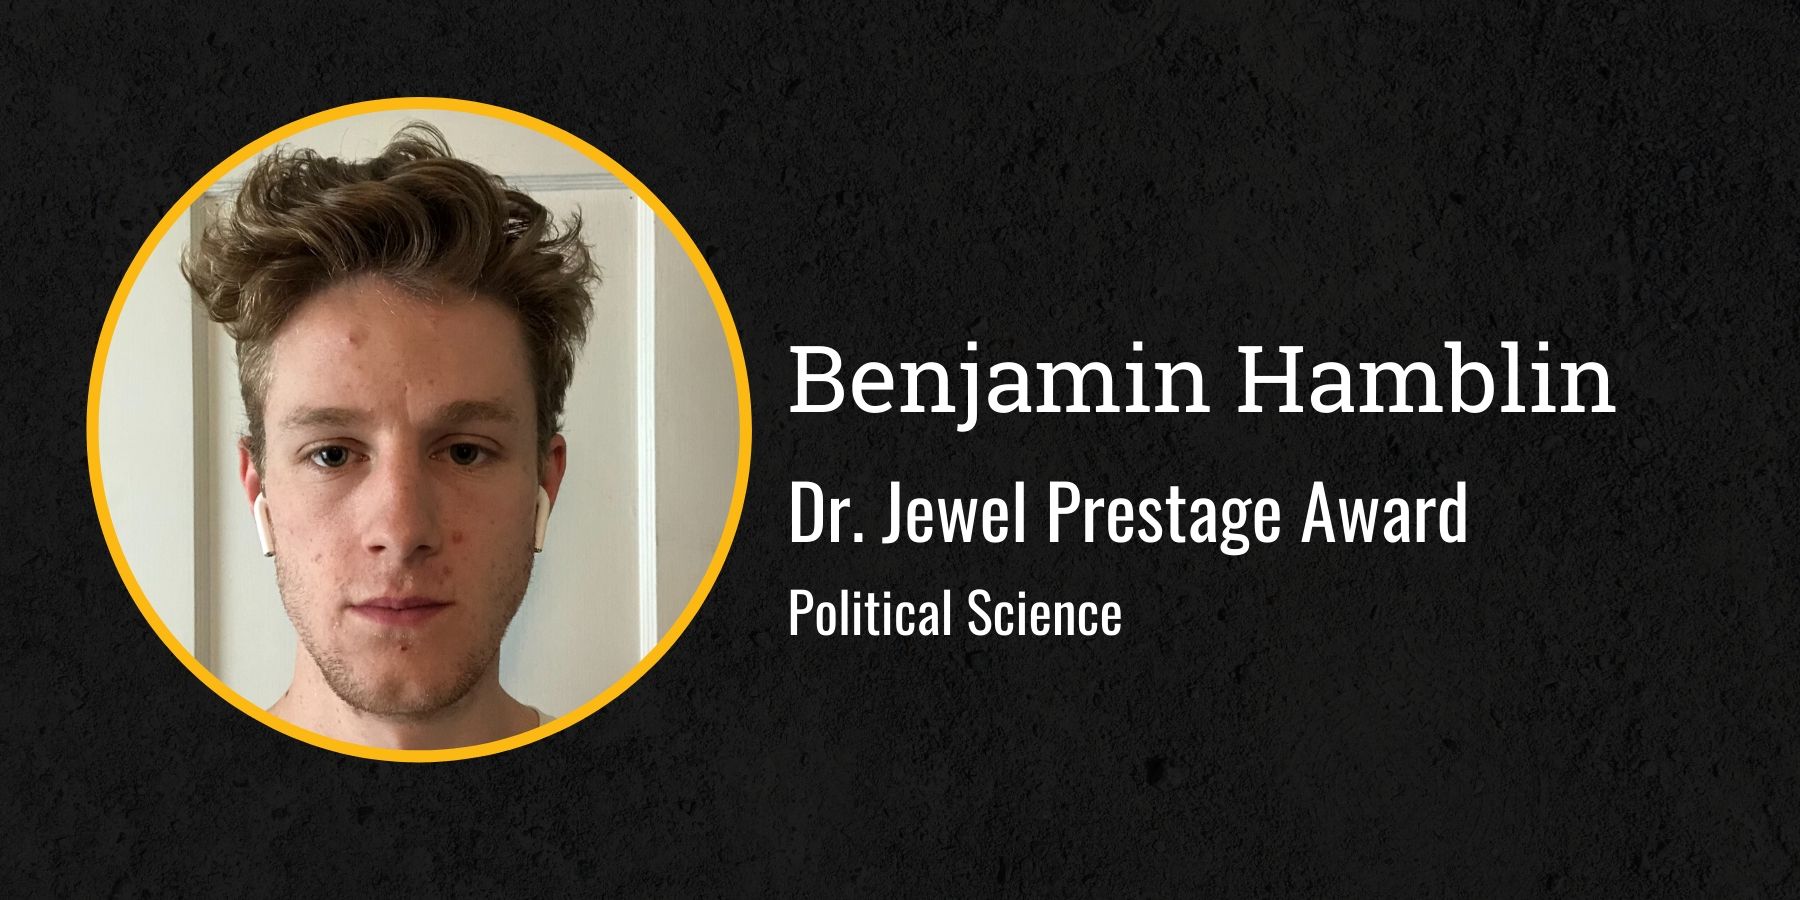 Photo of Benjamin Hamblin and text Dr. Jewel Prestage Award, Political Science